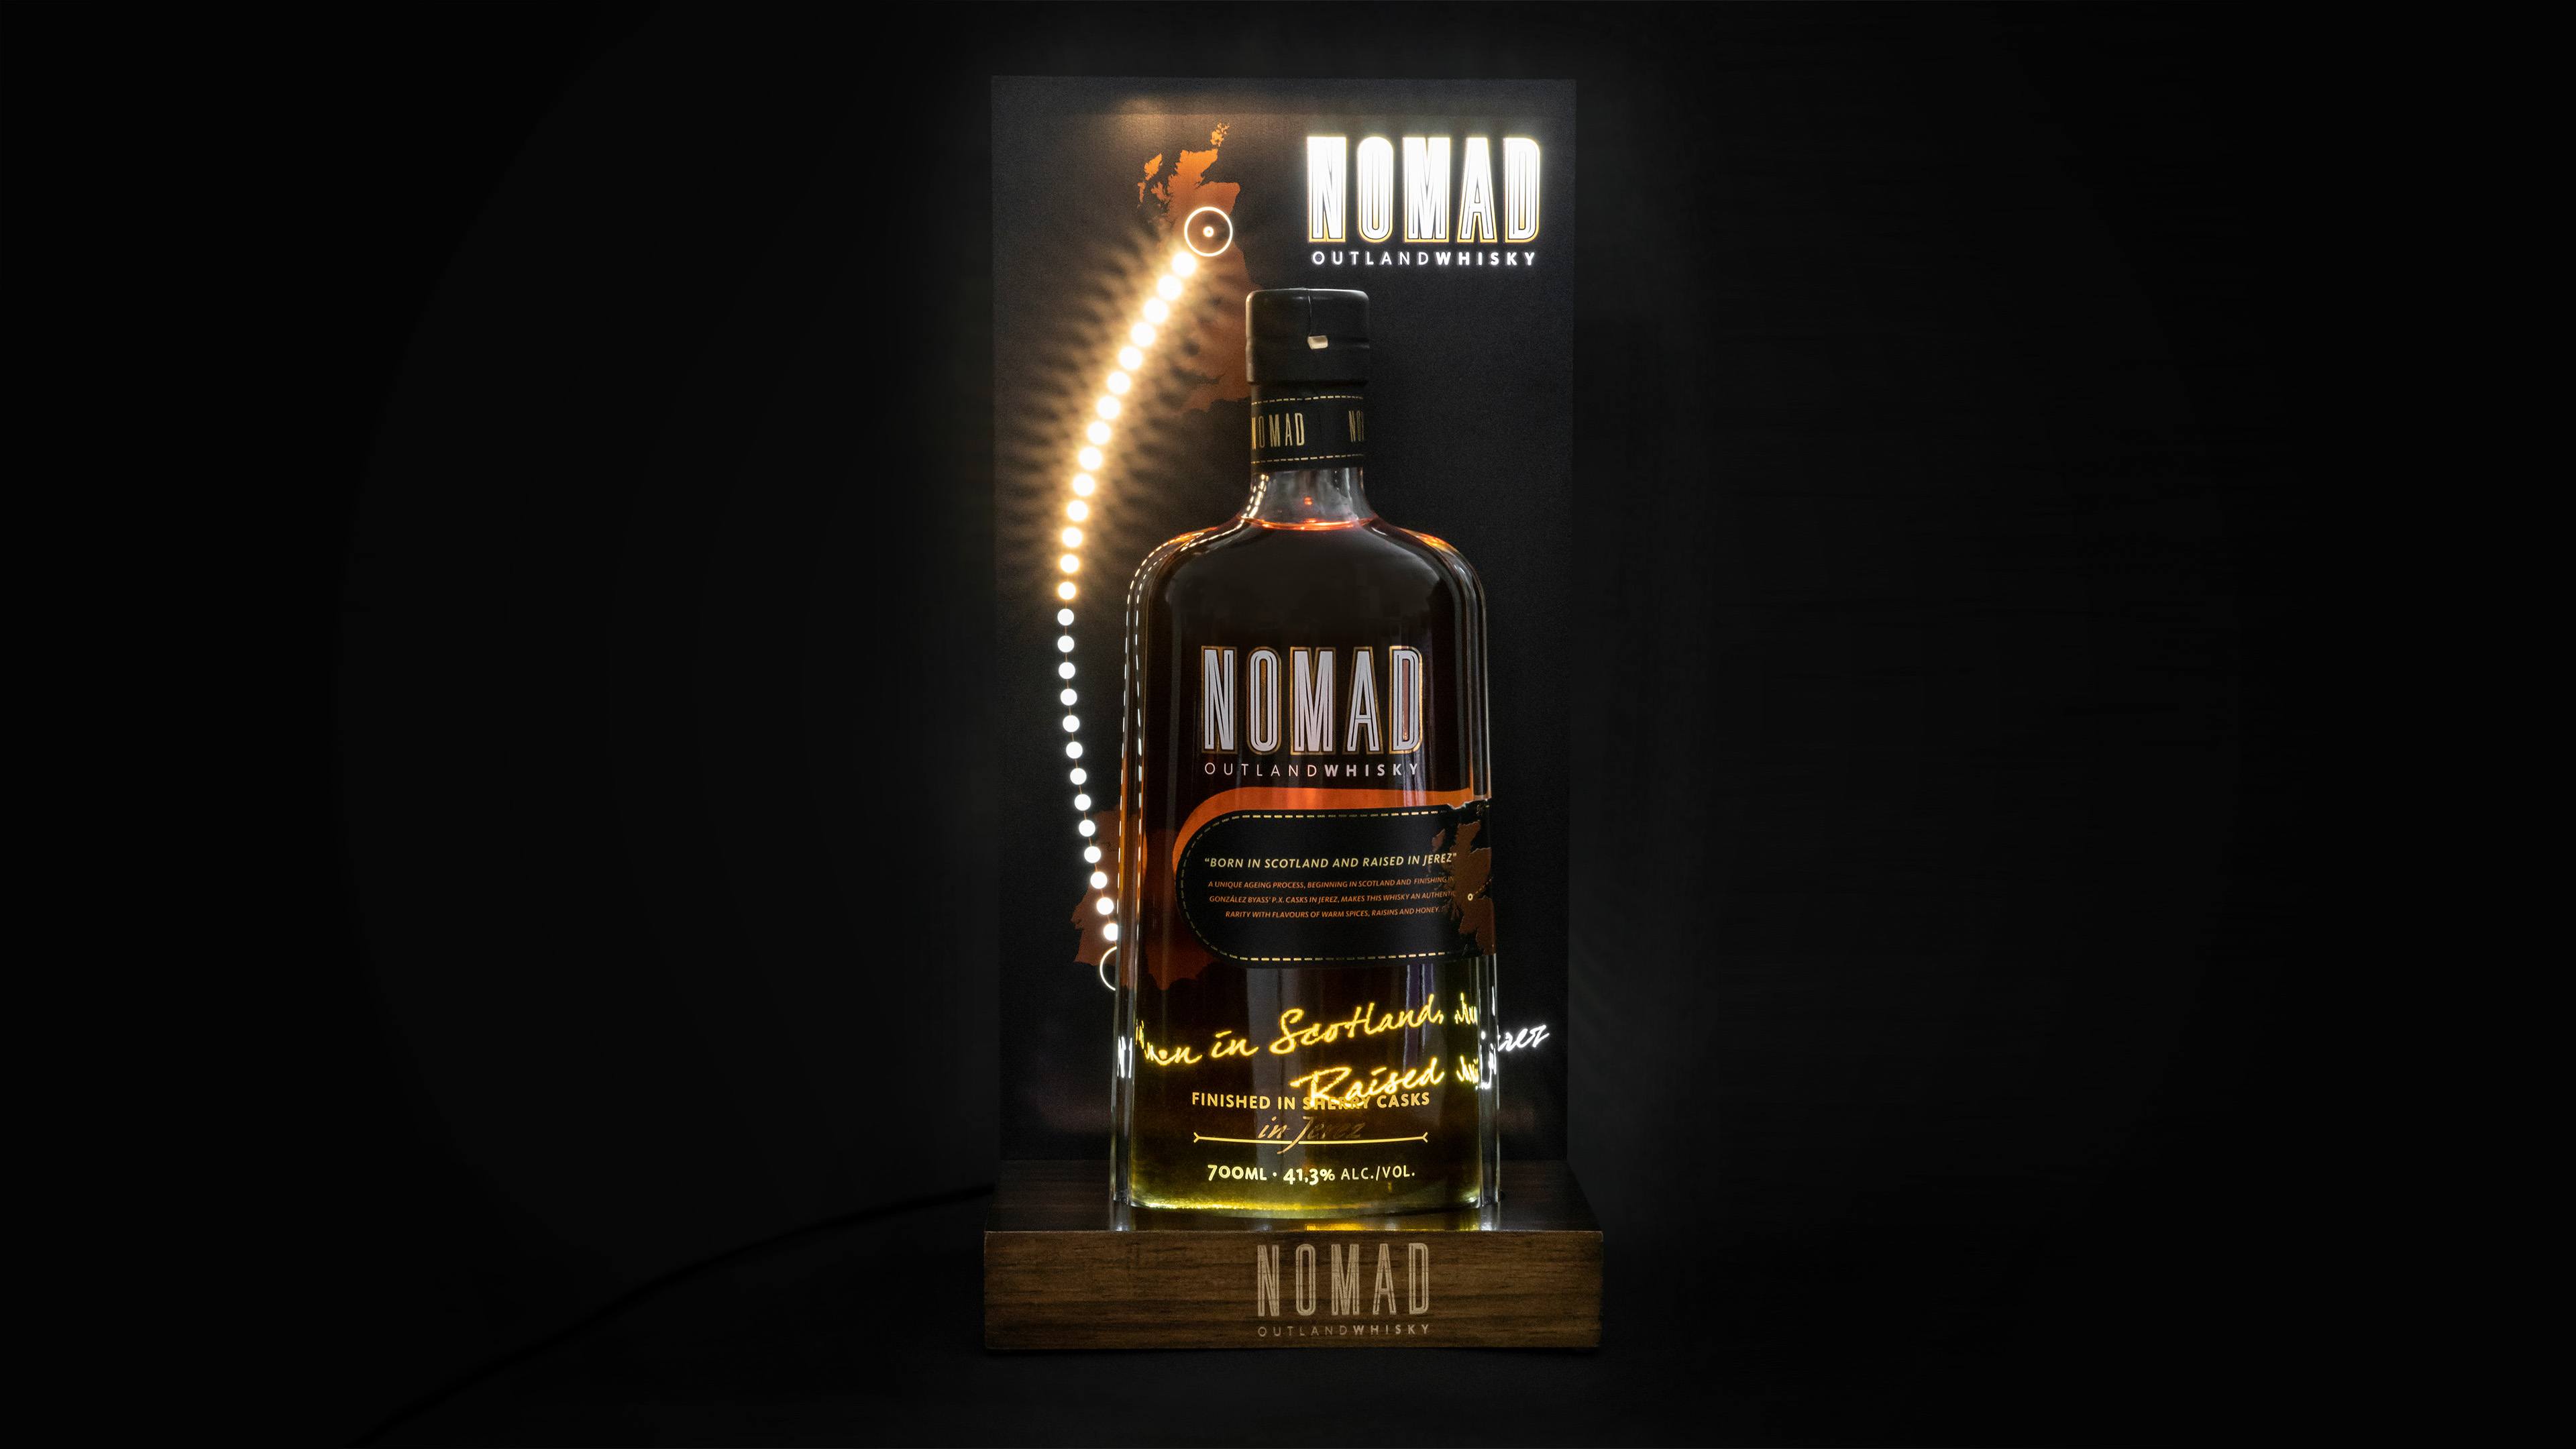 Nomad Outland Whisky Glorifier LED Display blinking blinkt leuchtet Lampe beleuchtung Holz Flaschenbeleuchtung Bottle Lamp Whiskey